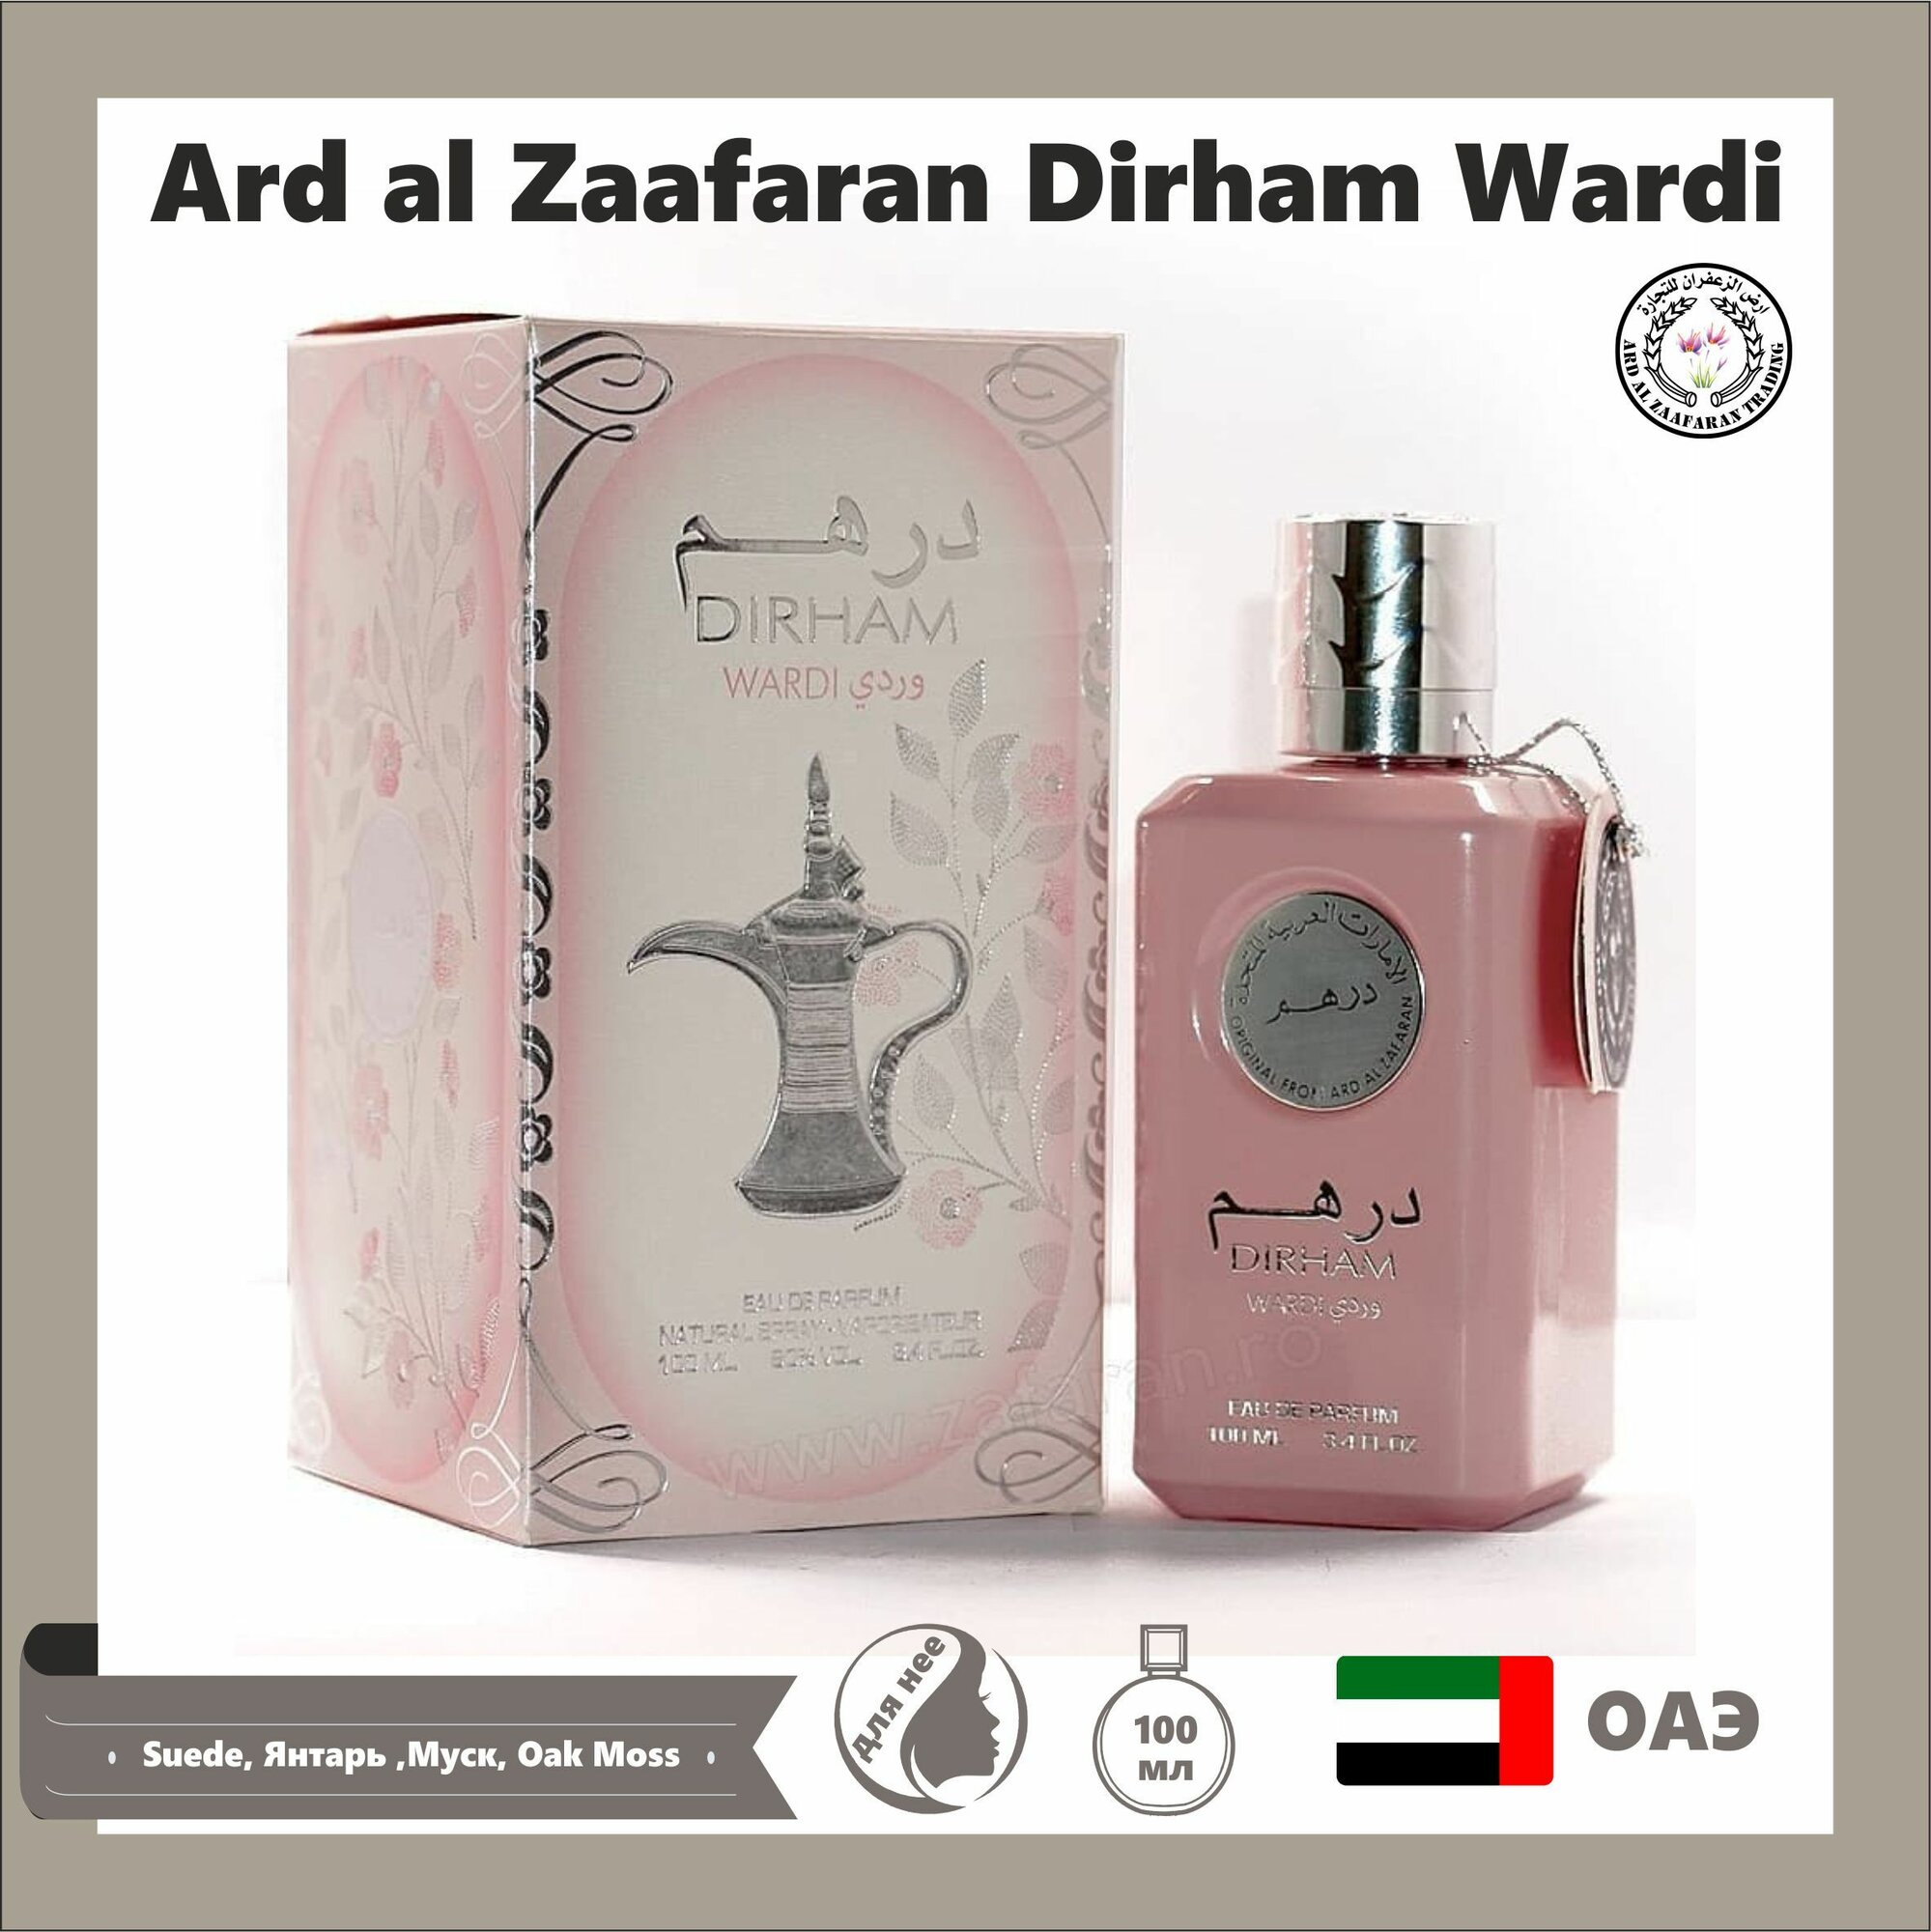 Женский Арабский парфюм Dirham Wardi, Ard al Zaafaran, ОАЭ, 100 мл